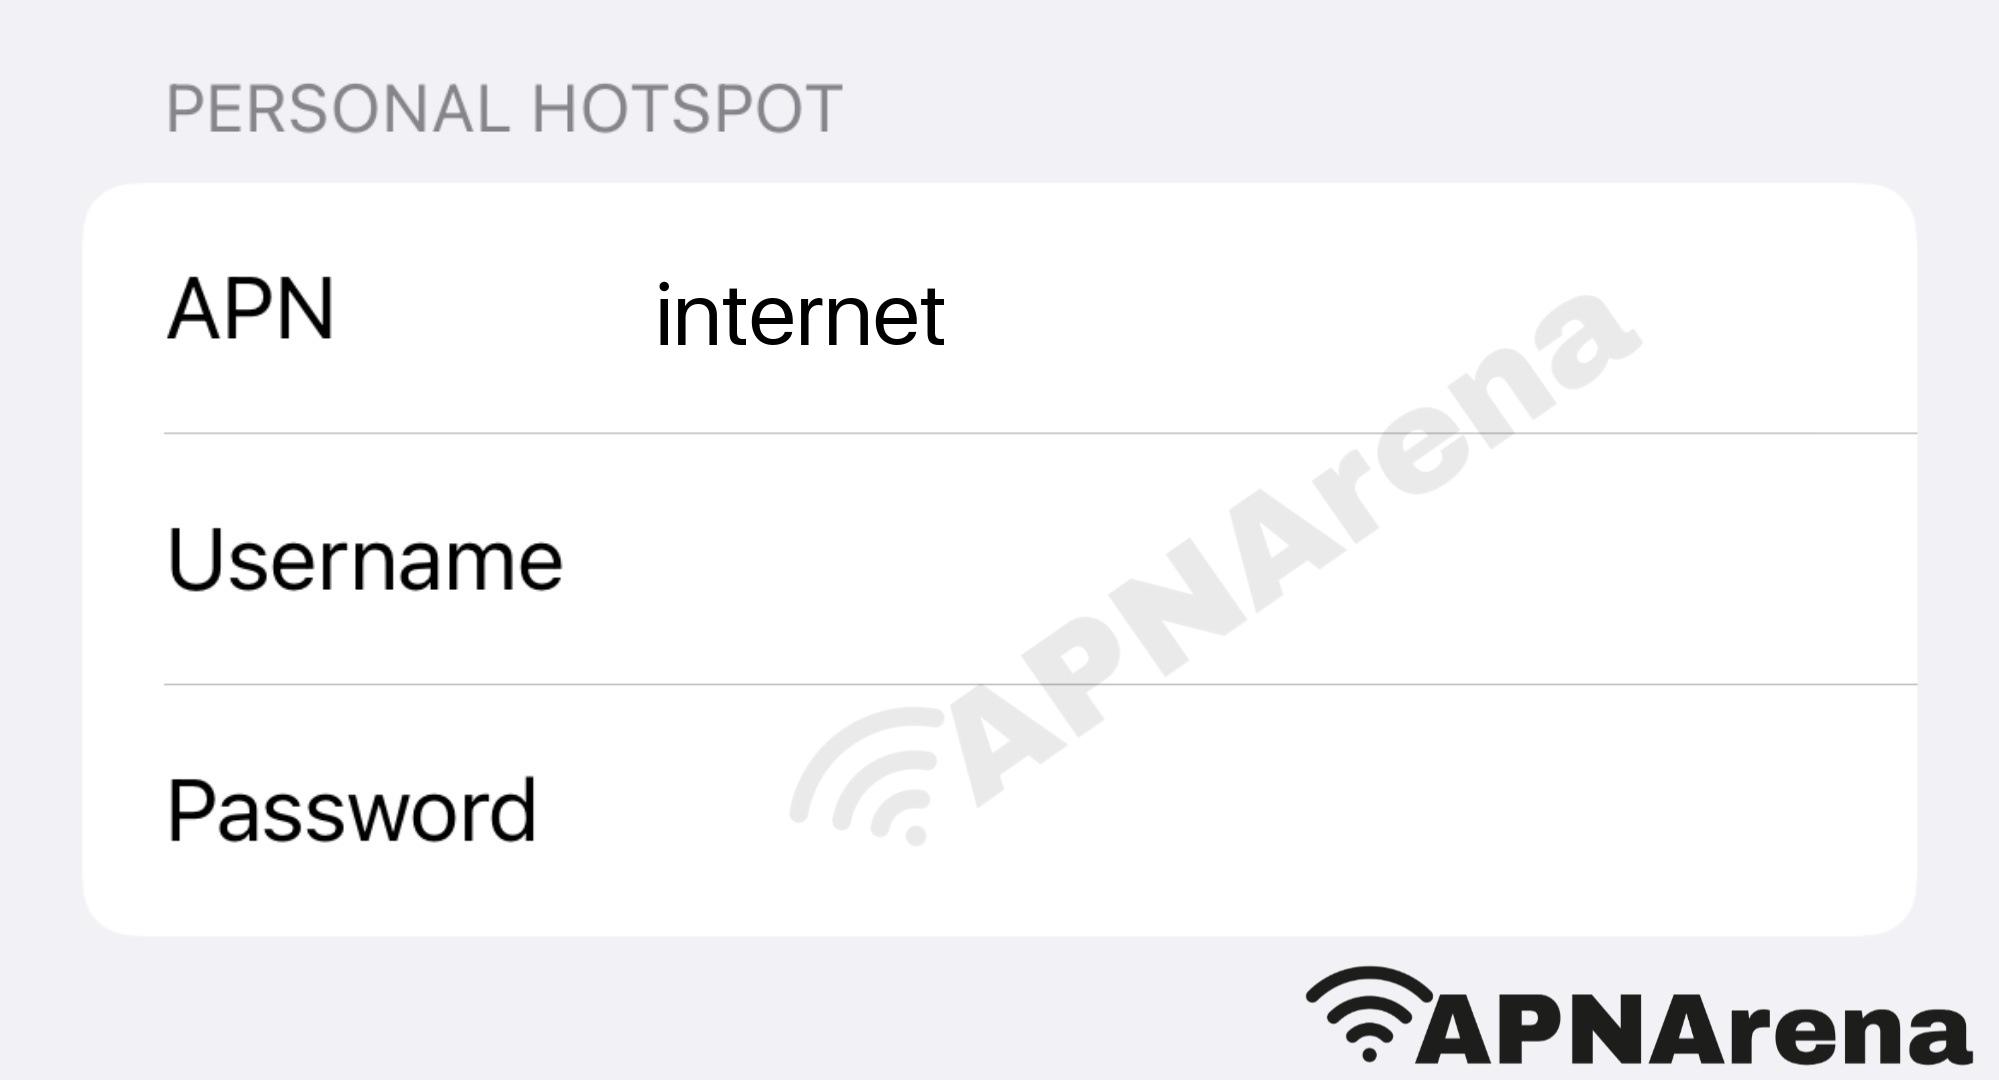 Kontakt Mobile Personal Hotspot Settings for iPhone